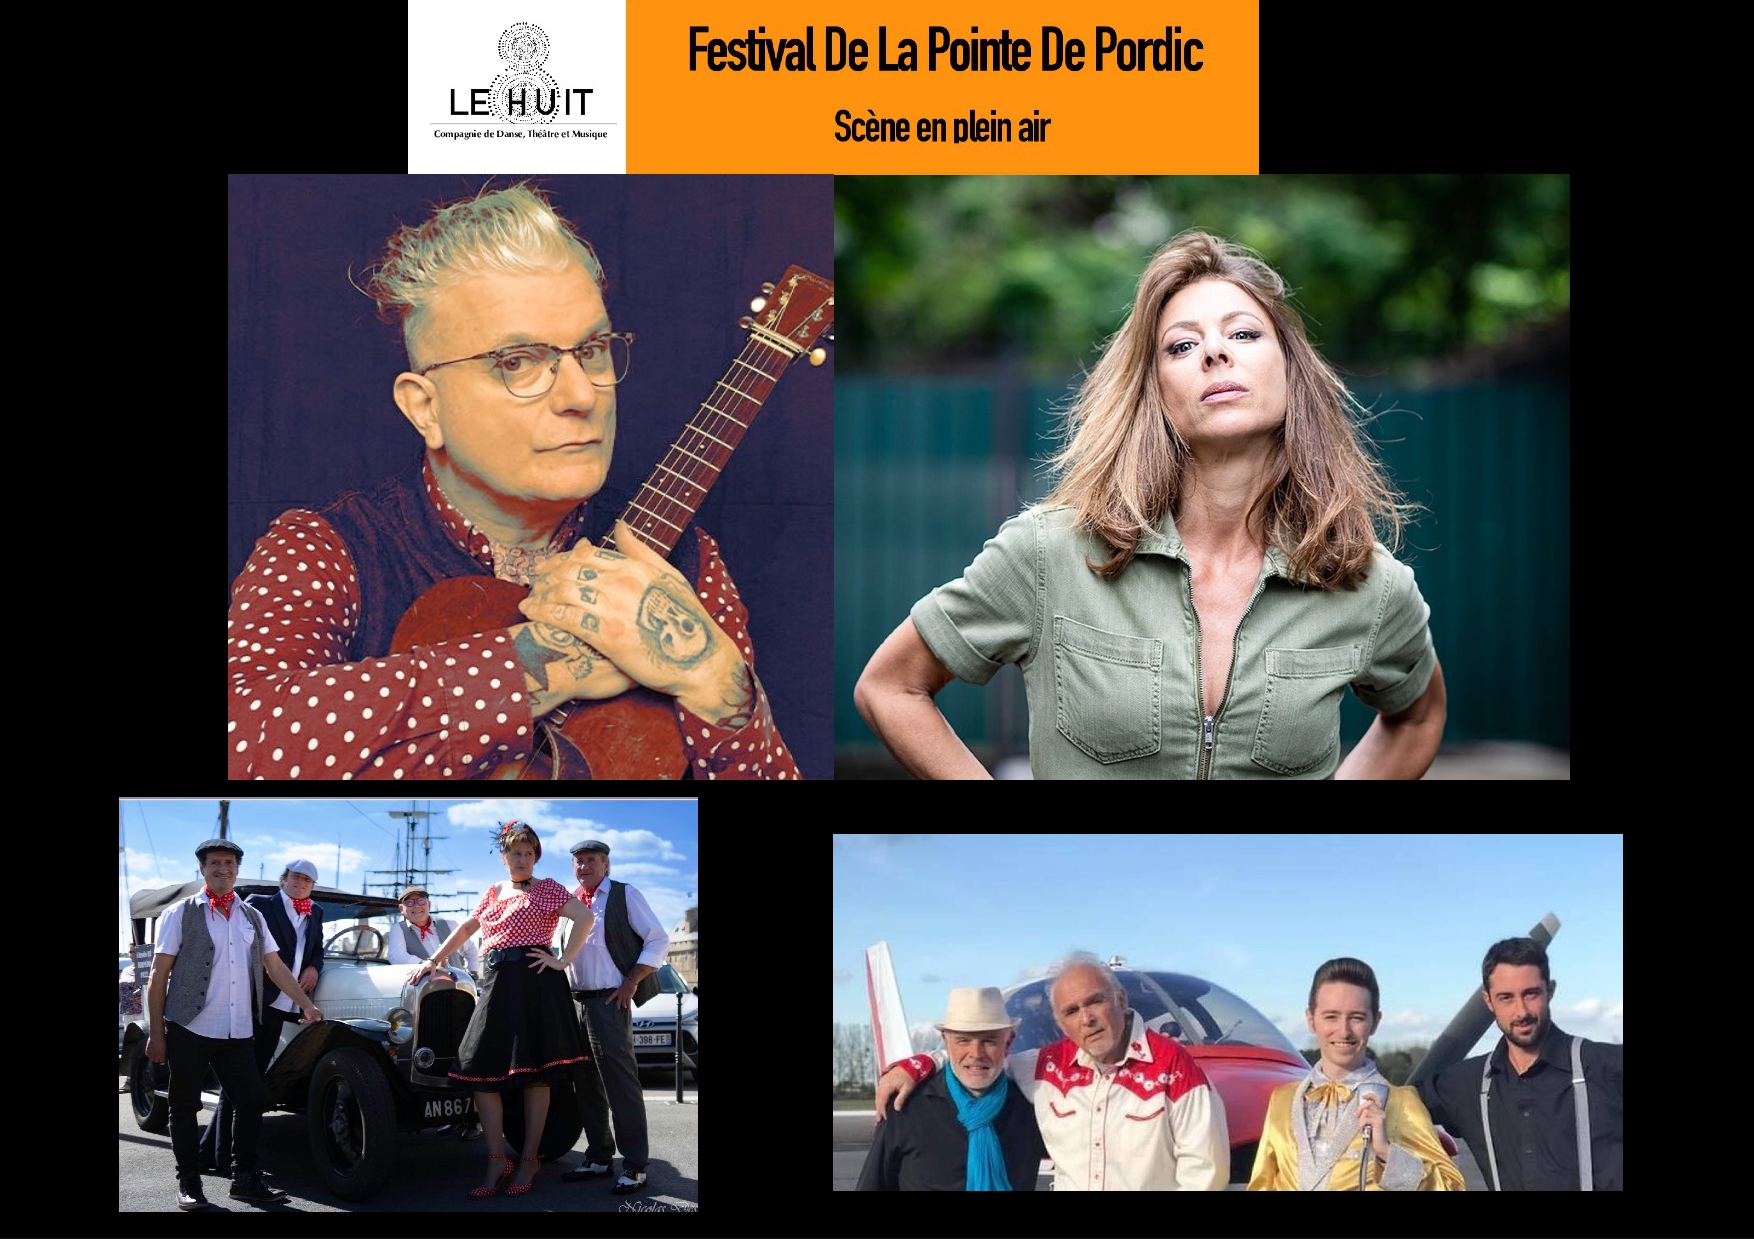 Festival de La Pointe de Pordic